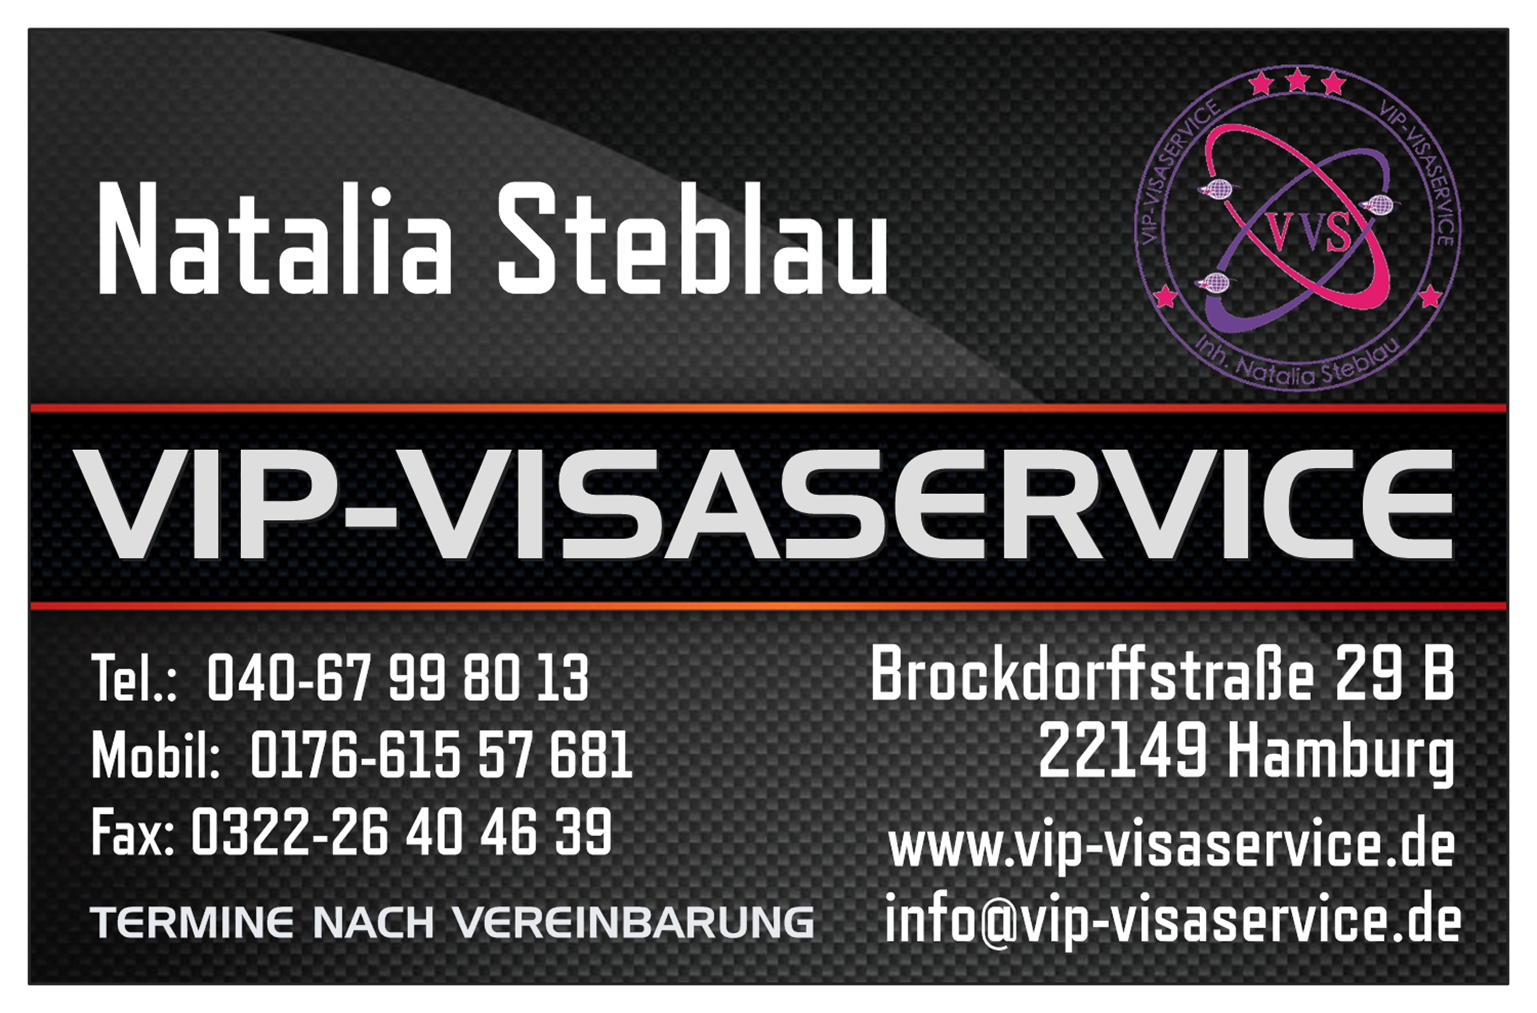 Bild 1 VIP-Visaservice, Inh. Natalia Steblau in Hamburg